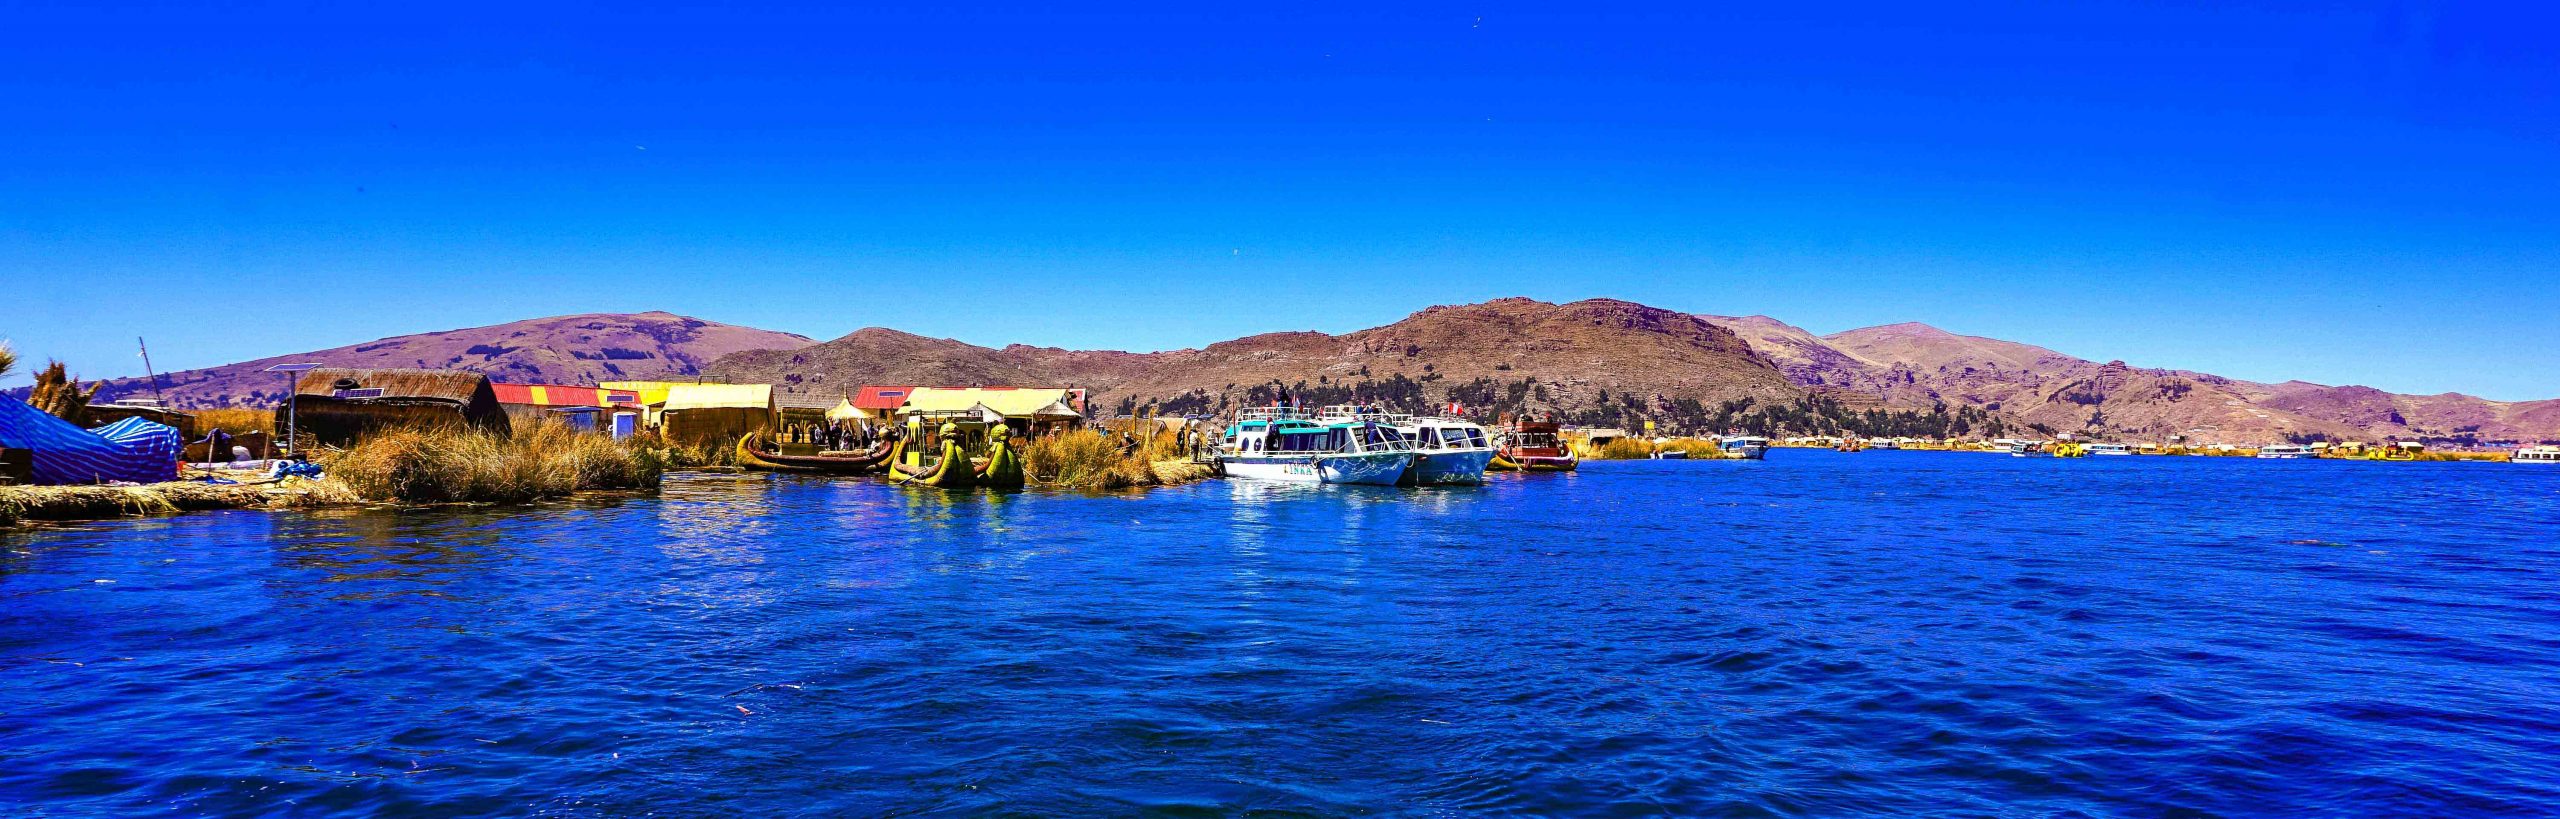 Lake Titicaca 2D/1N